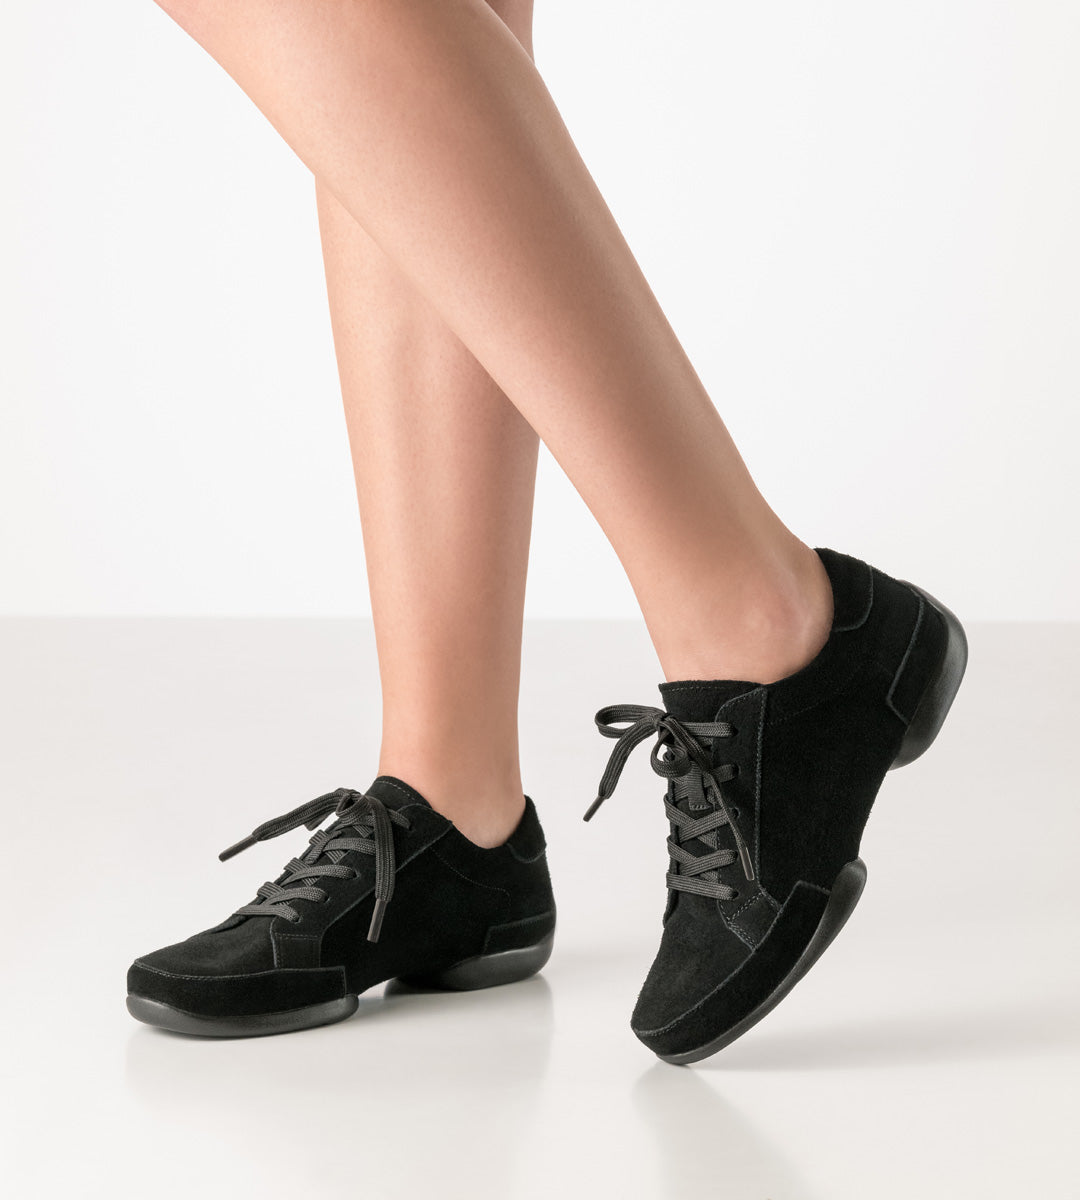 Werner Kern 155 Ladies Practice Dance Sneakers in Black Suede with a Padded Upper Ledge